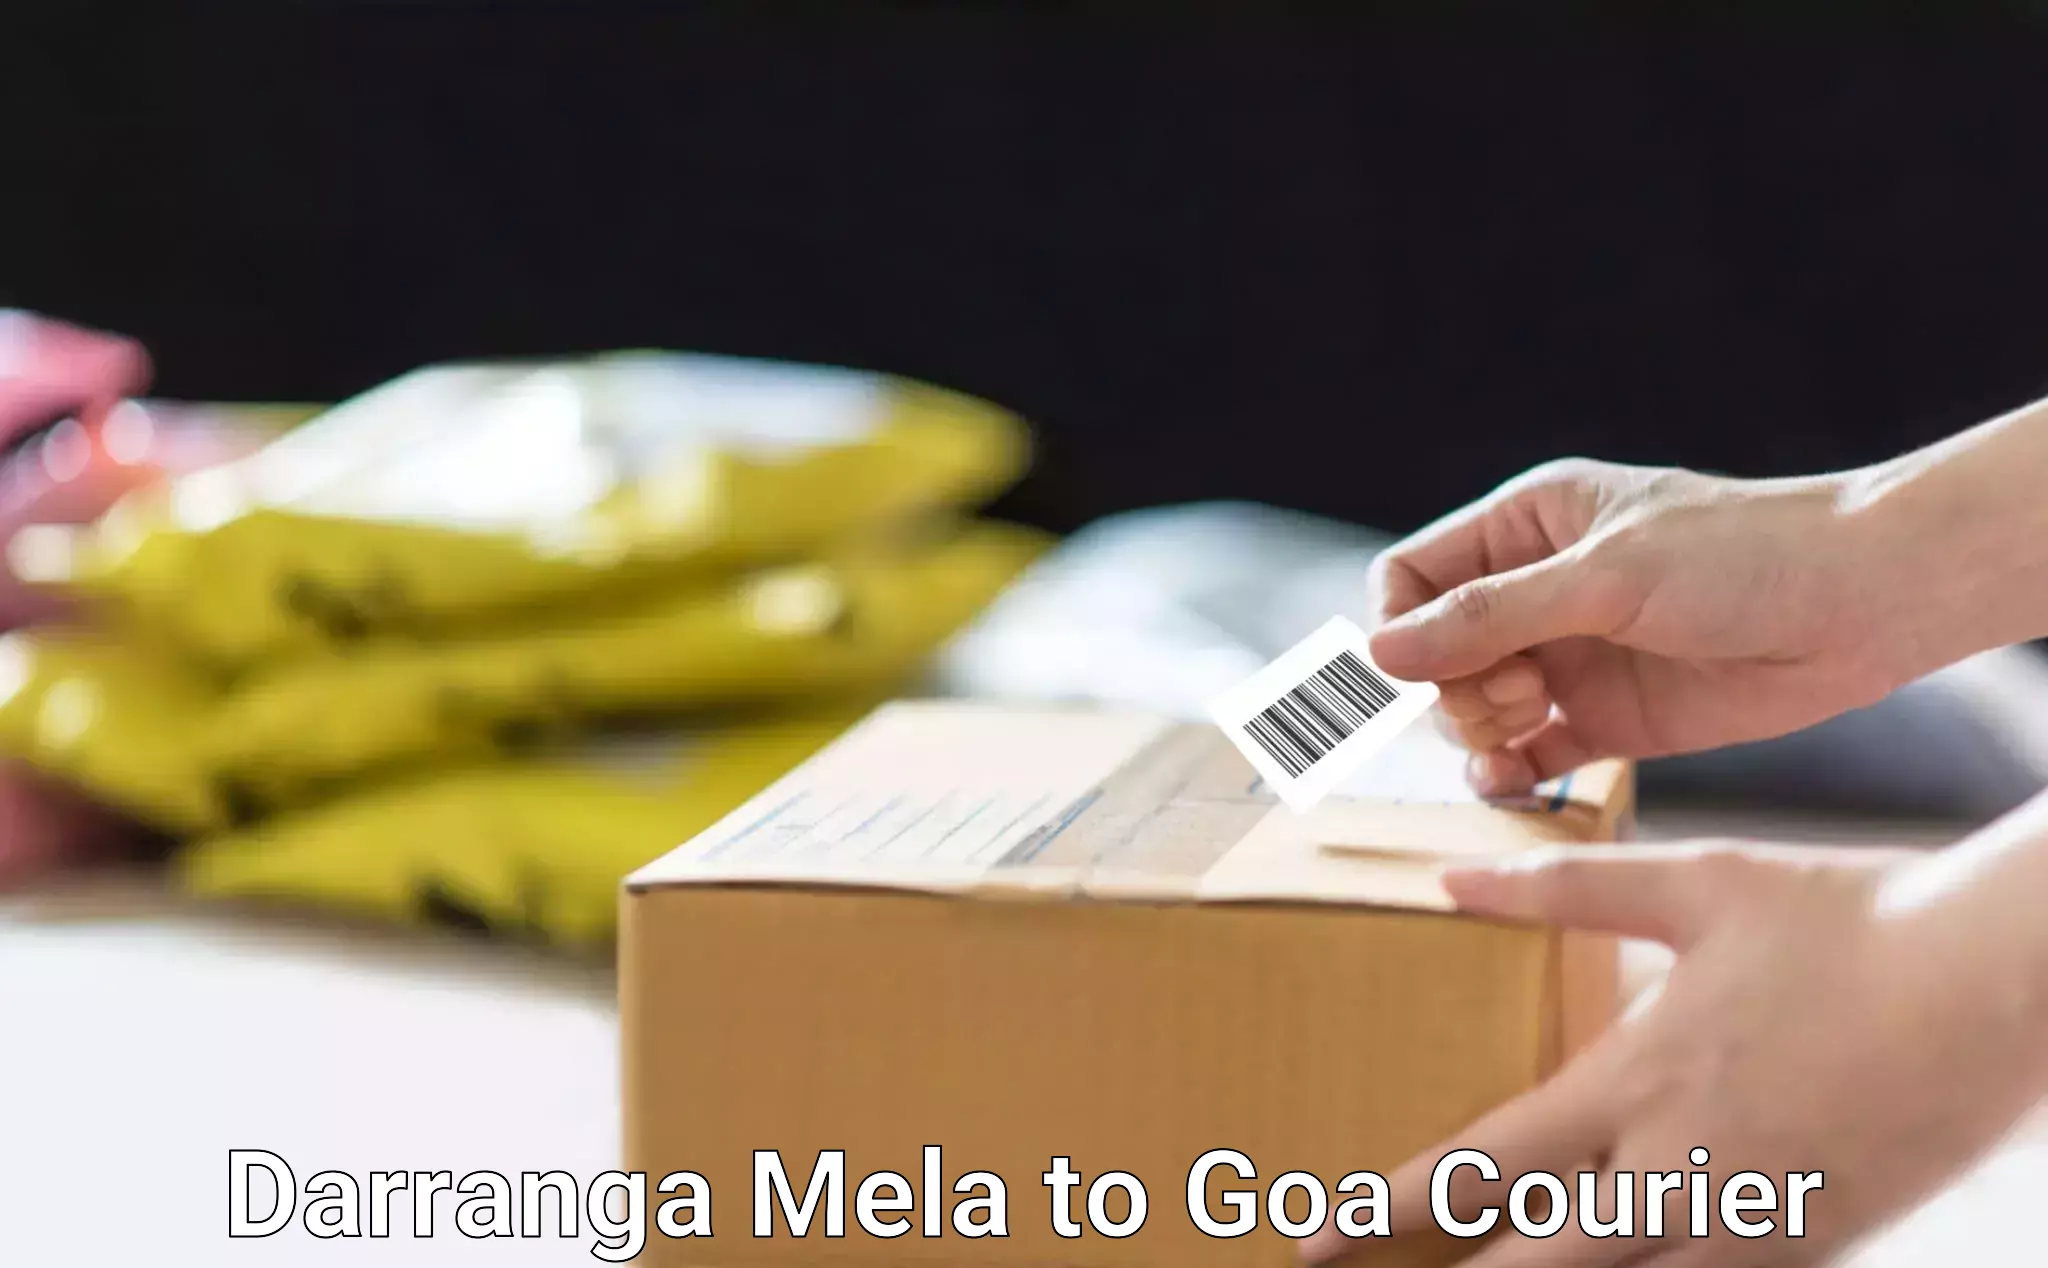 Specialized shipment handling in Darranga Mela to South Goa